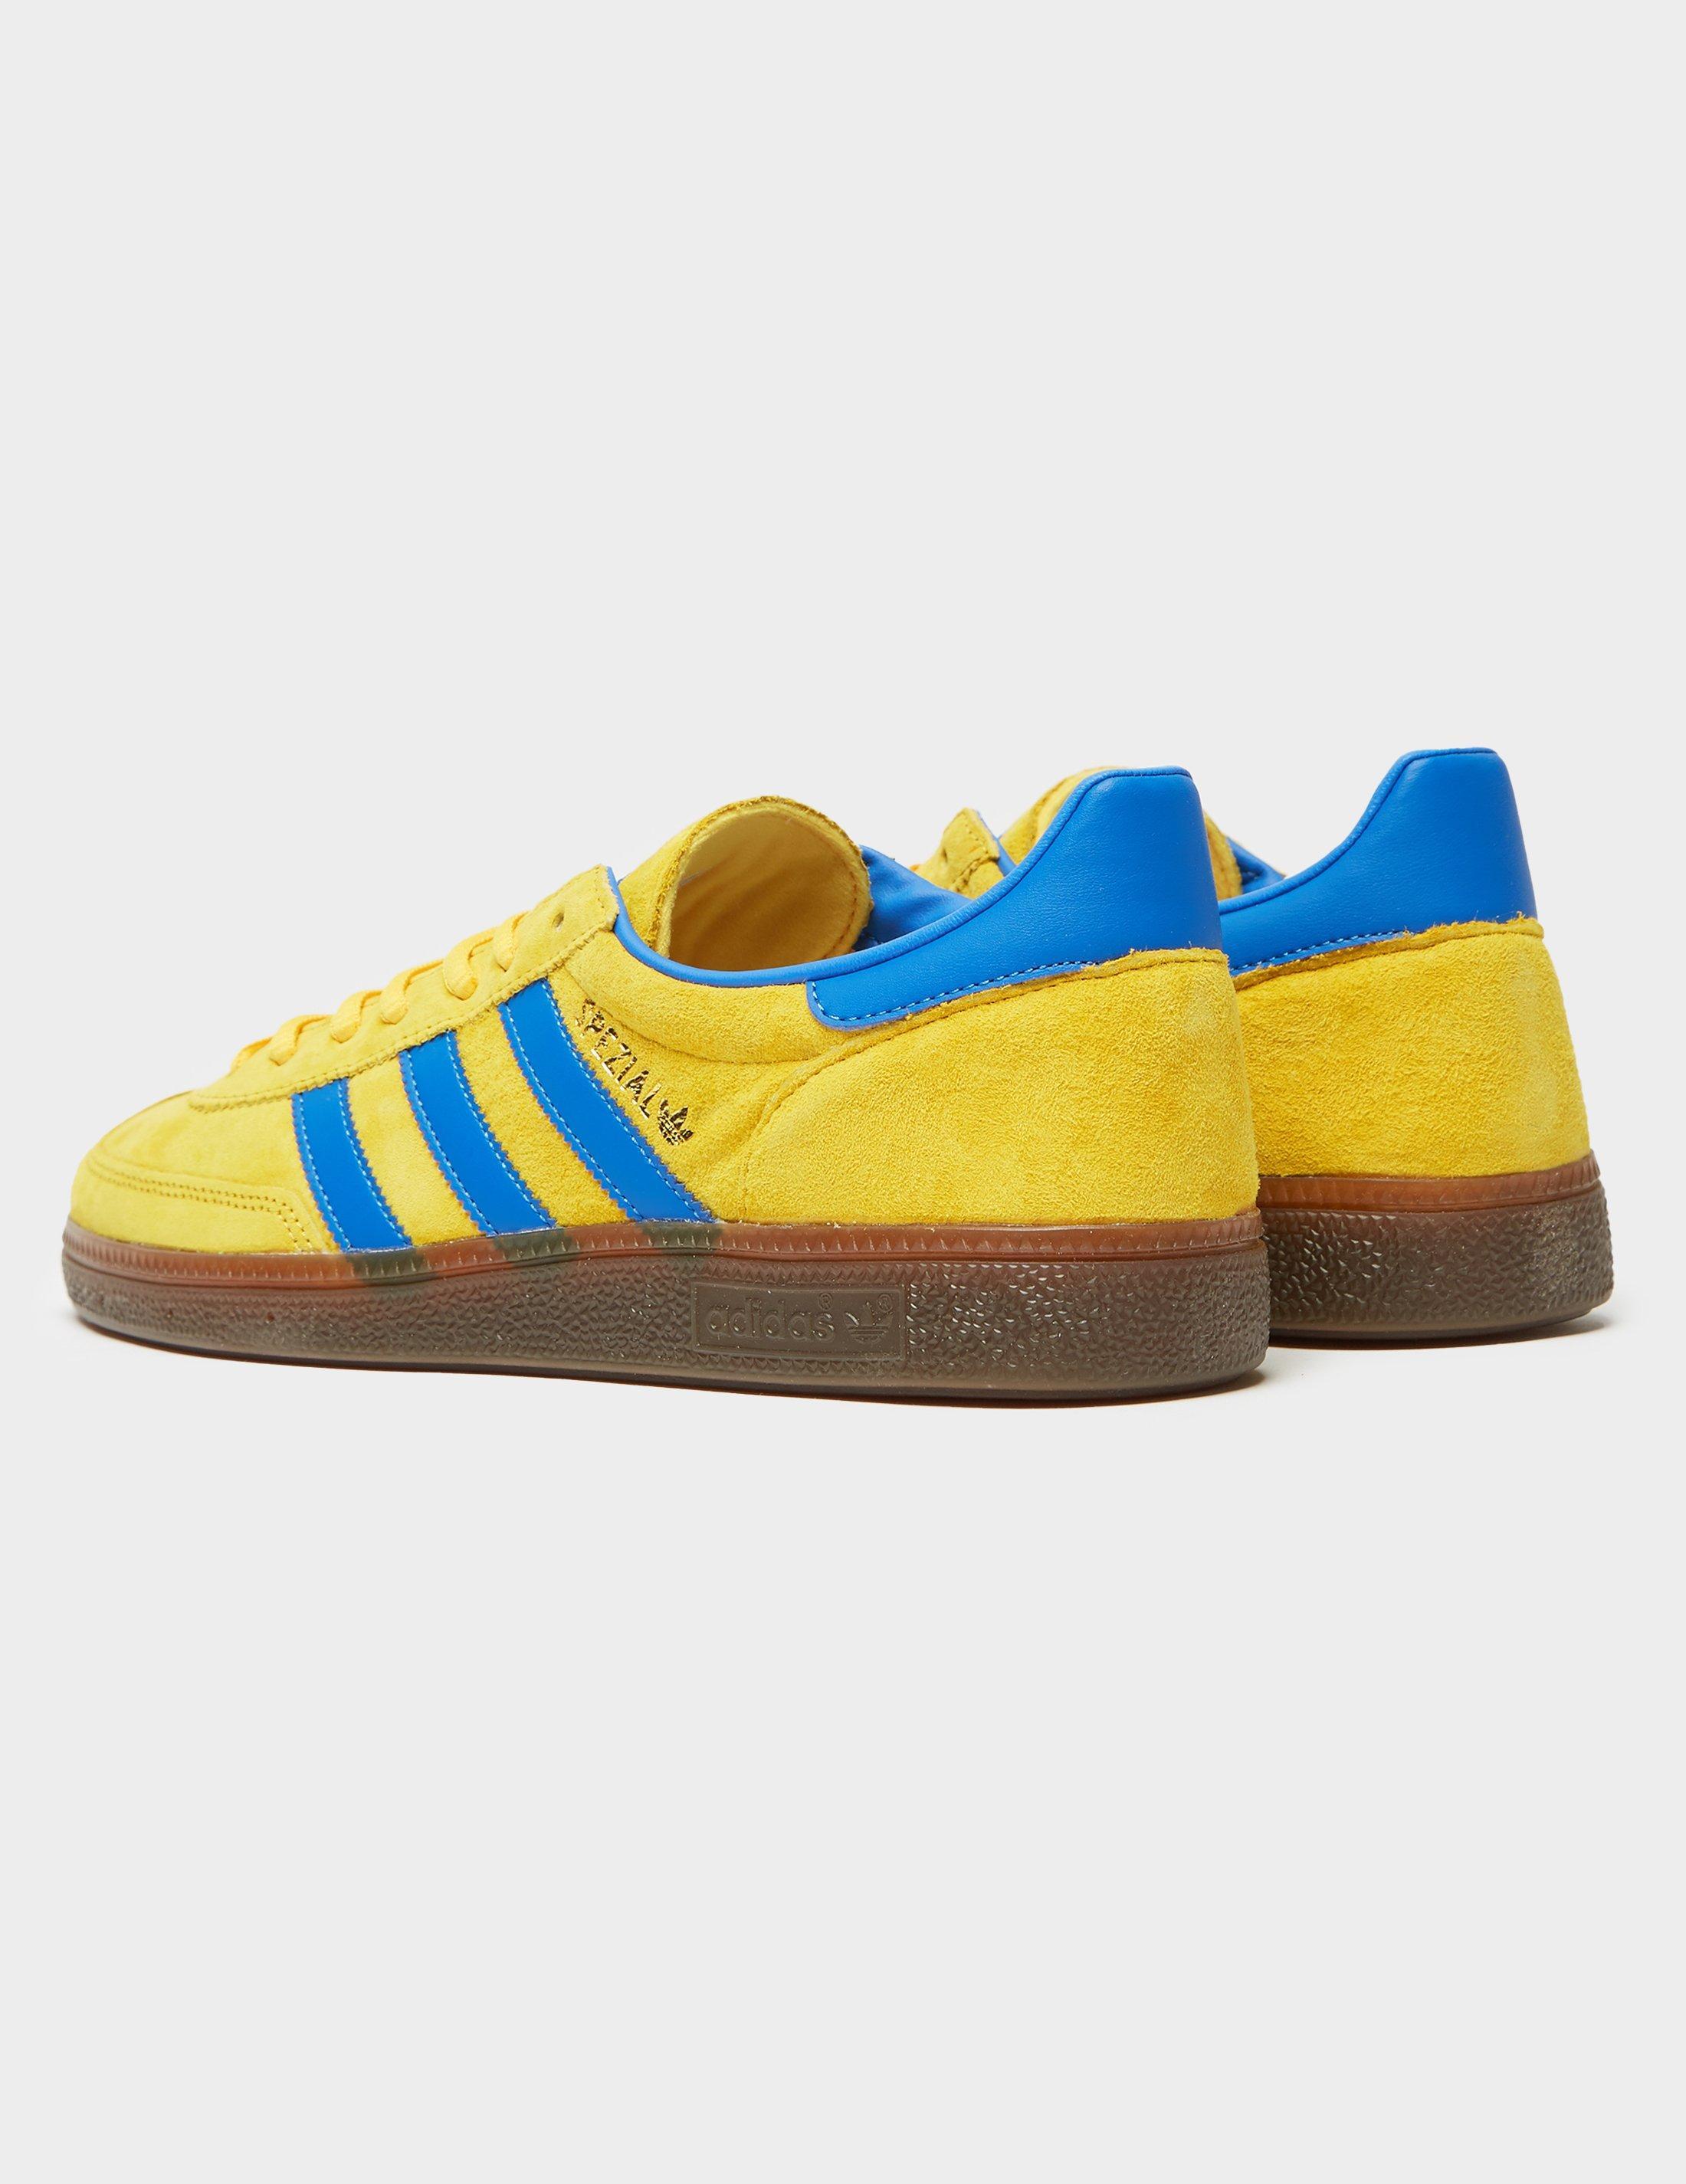 adidas Originals Suede Handball Spezial Yellow/blue for Men | Lyst